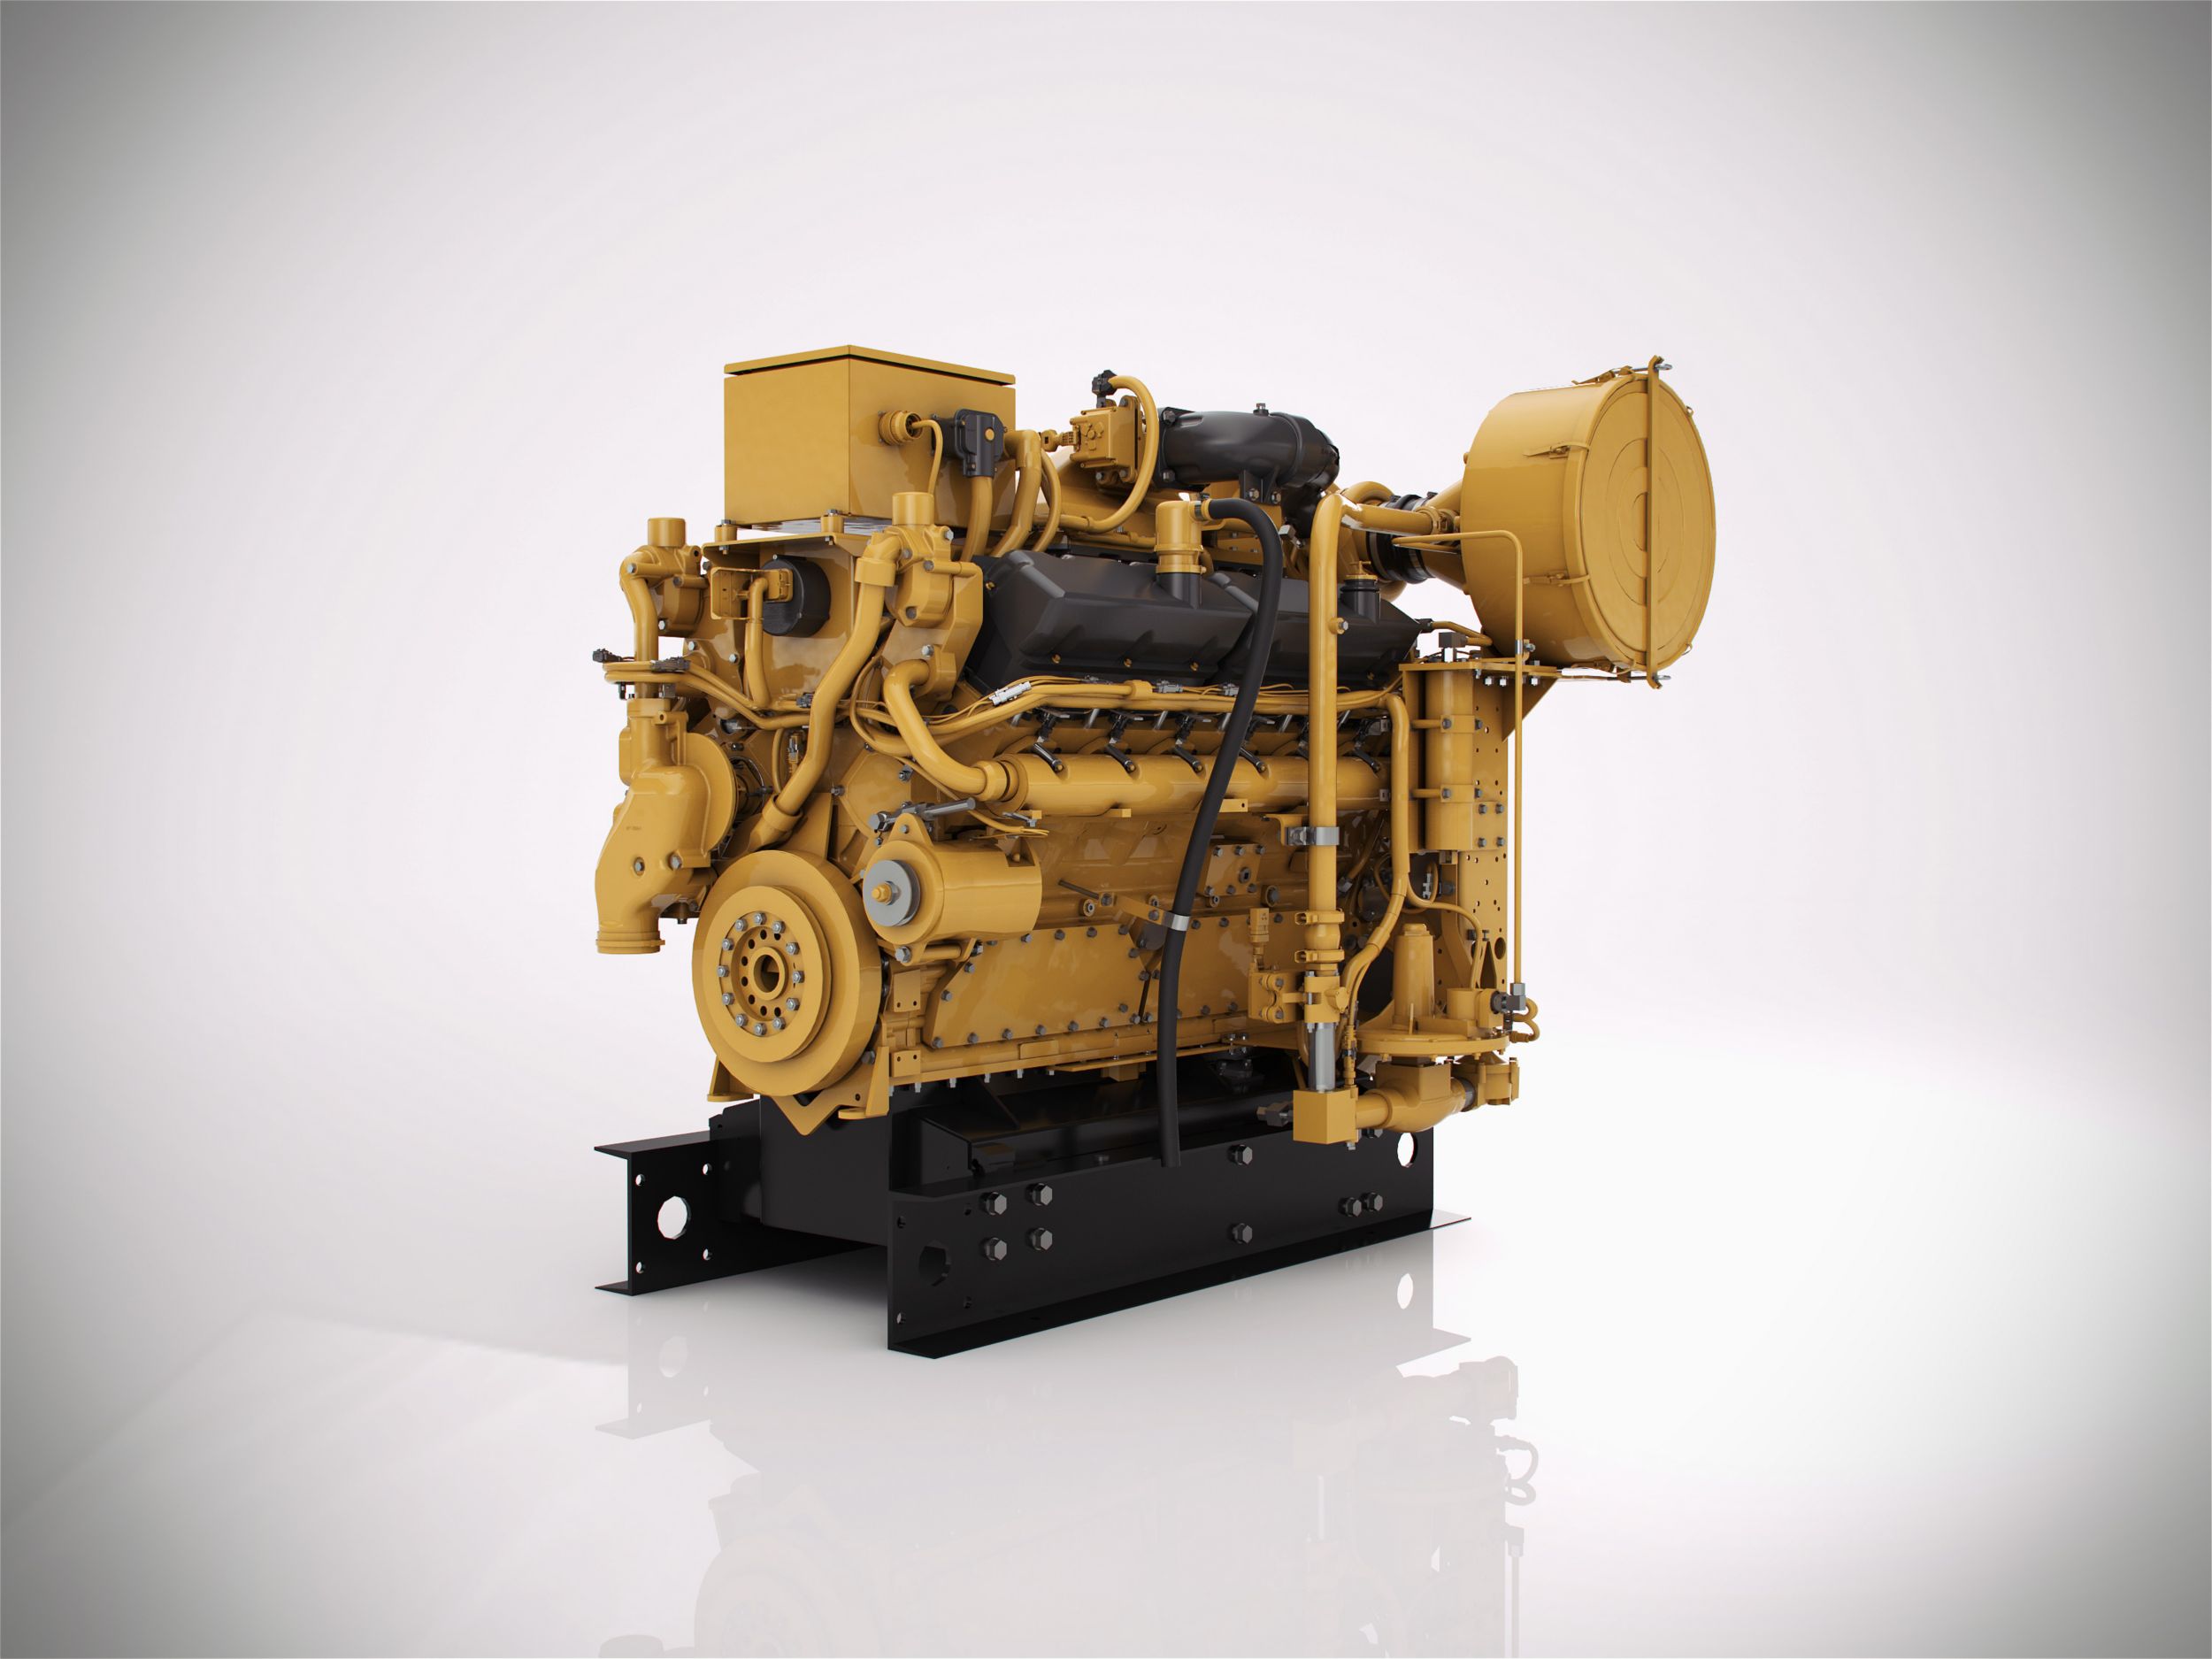 CG137-12 Gas Compression Engines | Cat | Caterpillar